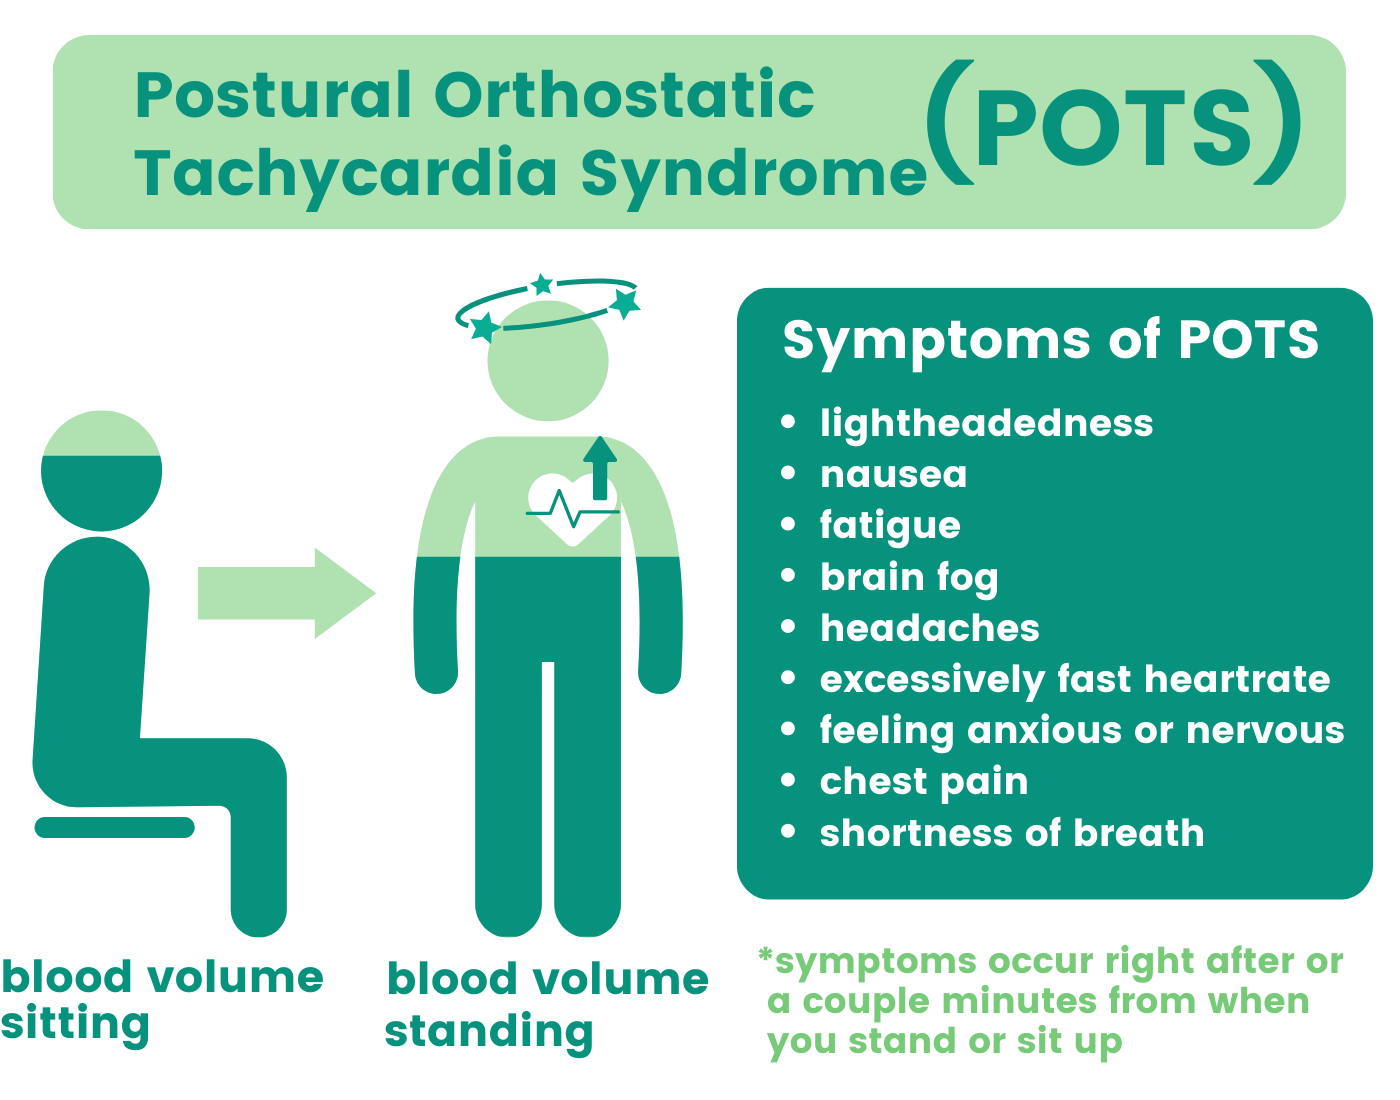 Postural Orthostatic Tachycardi syndrome